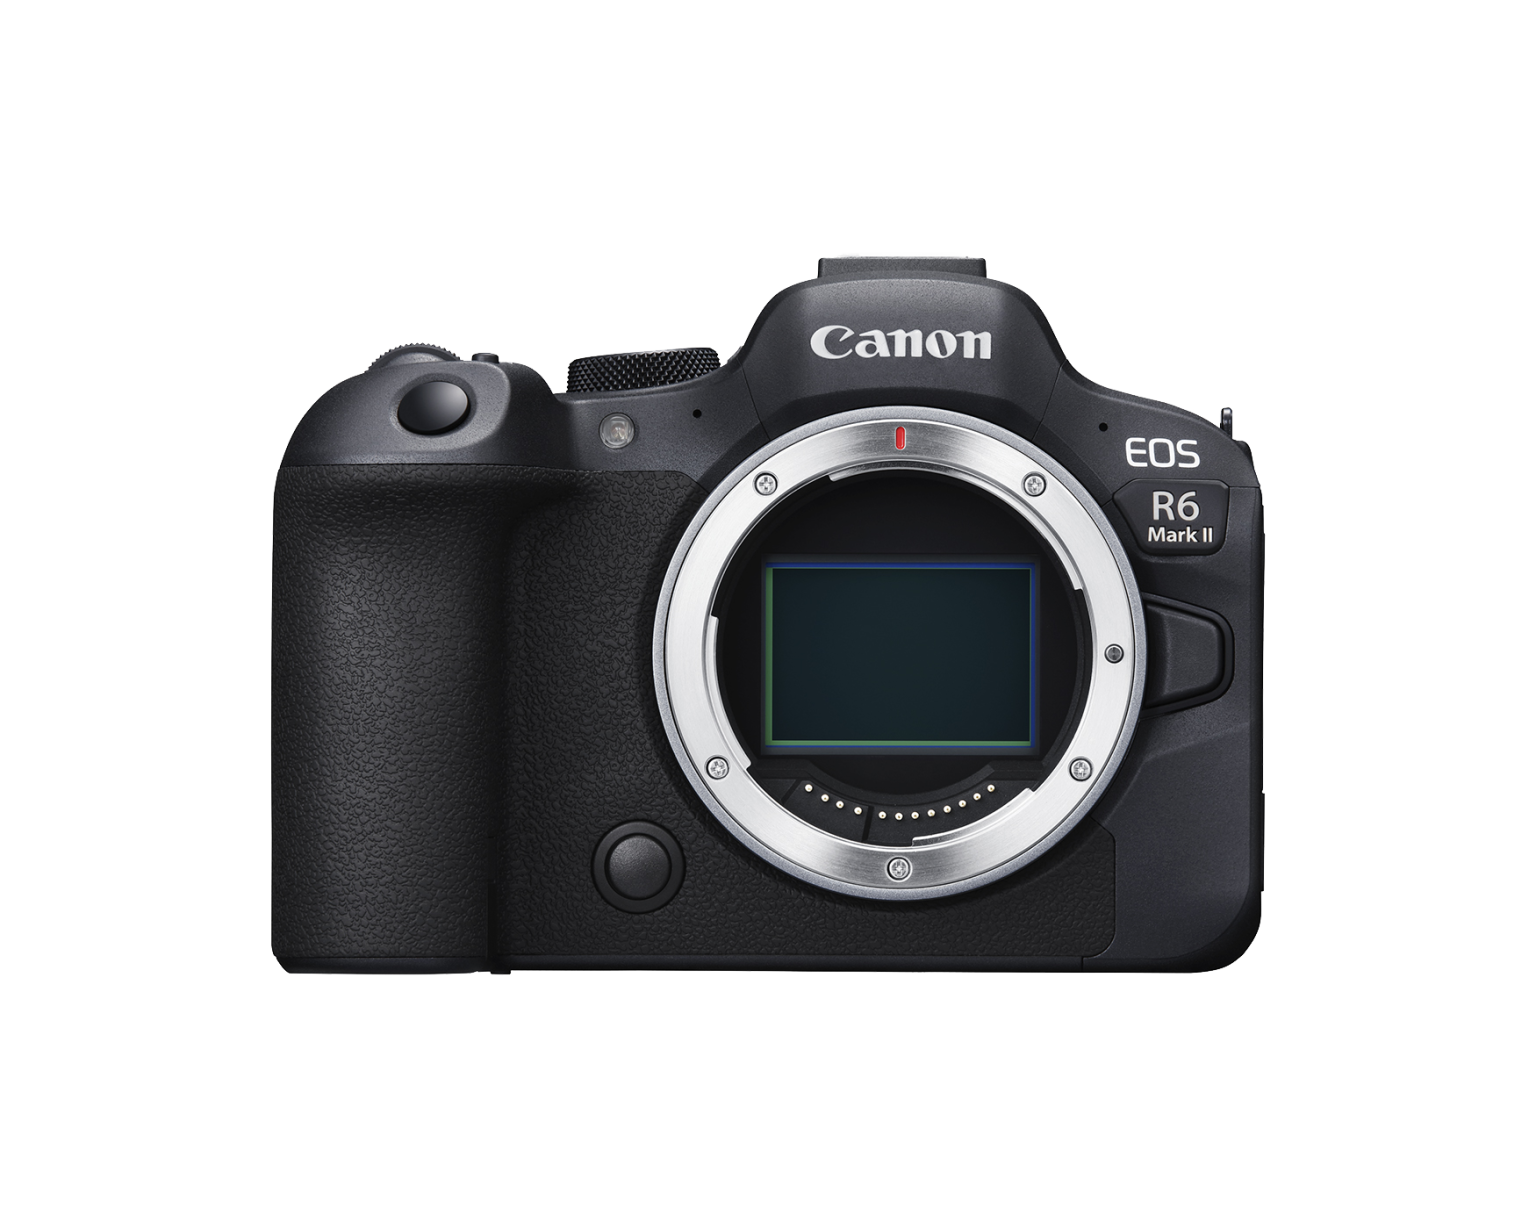 5666C002 eos r6 mark ii body primary 1536x1229 - Canon releases firmware v1.1.1 for the Canon EOS R6 Mark II